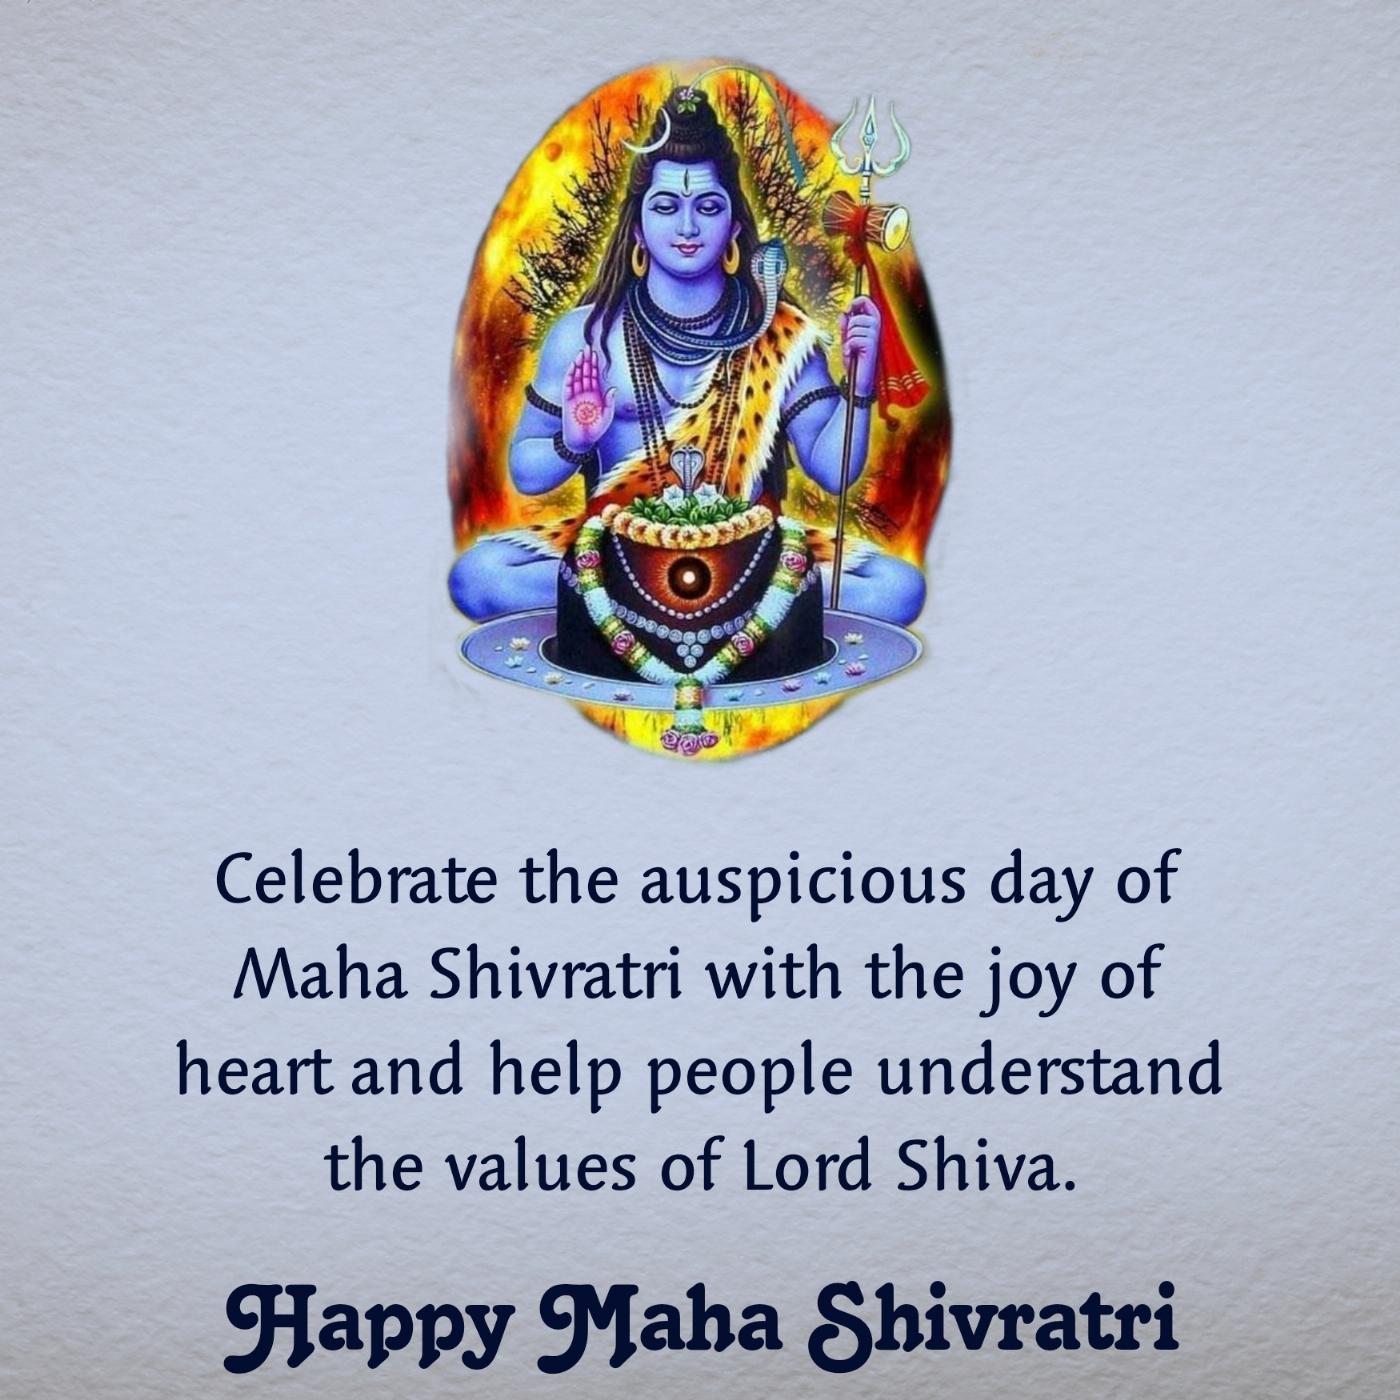 Celebrate the auspicious day of Maha Shivratri with the joy of heart